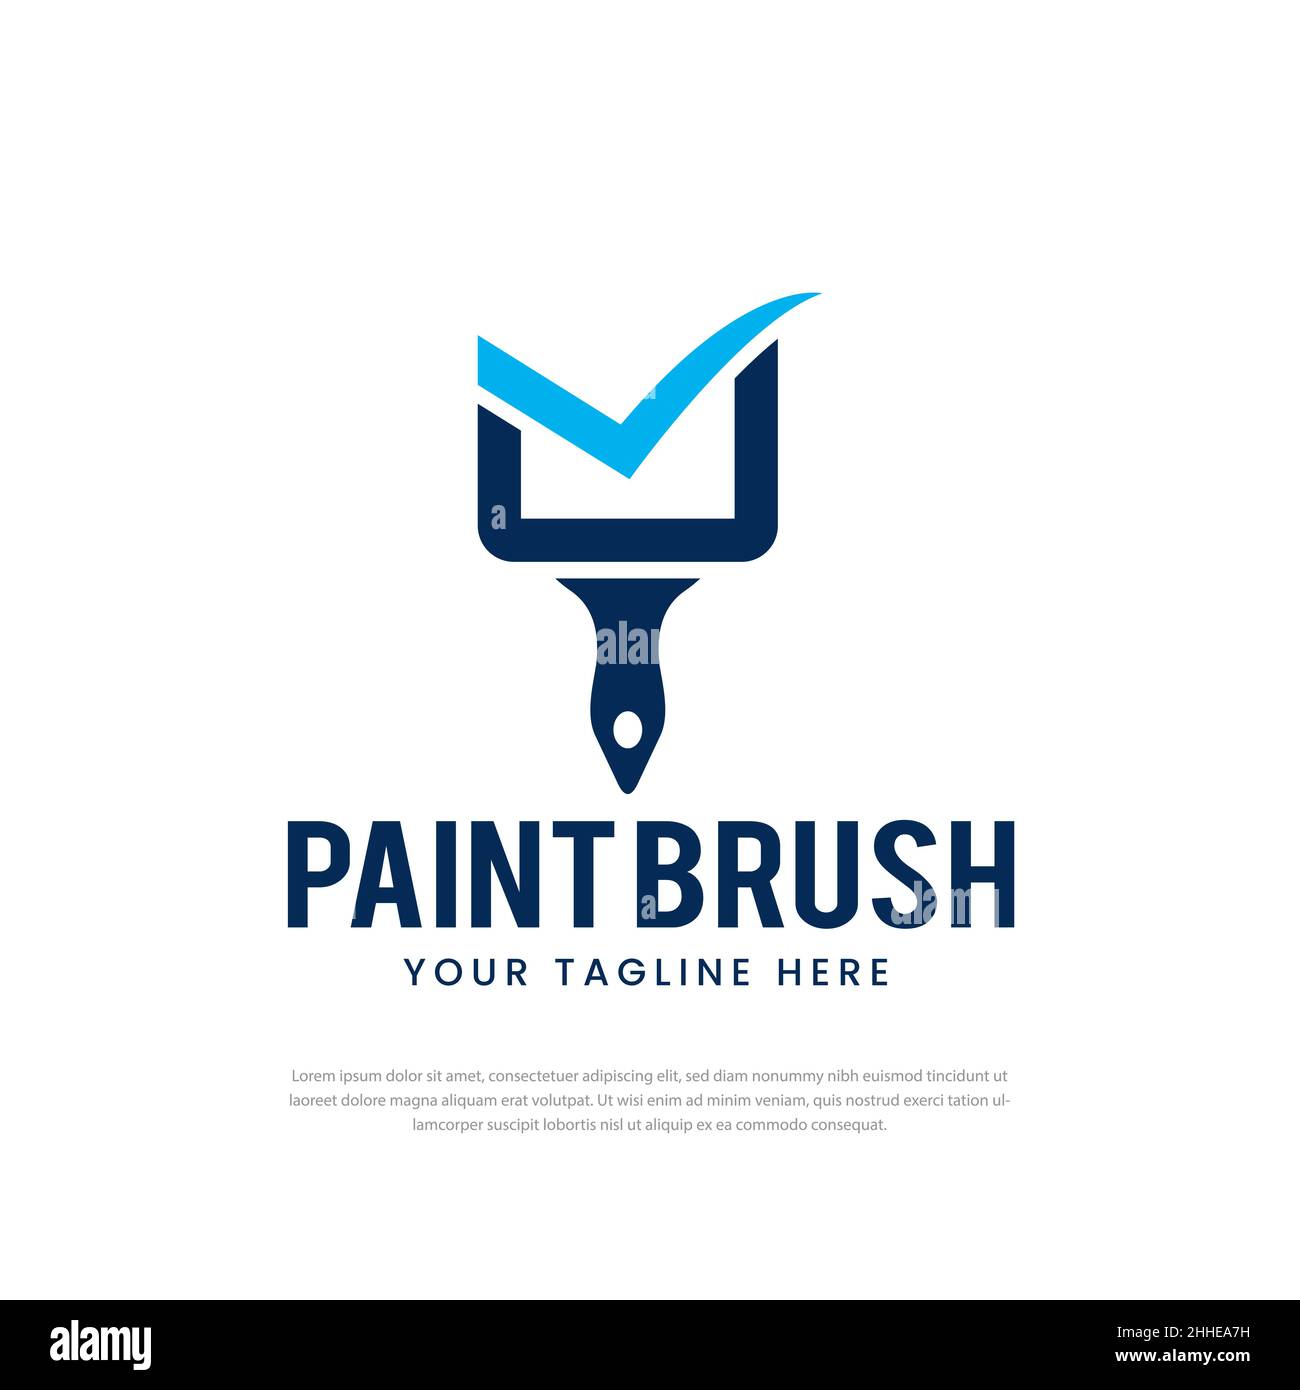 Paint brush logo design check icon, symbol, template Stock Vector